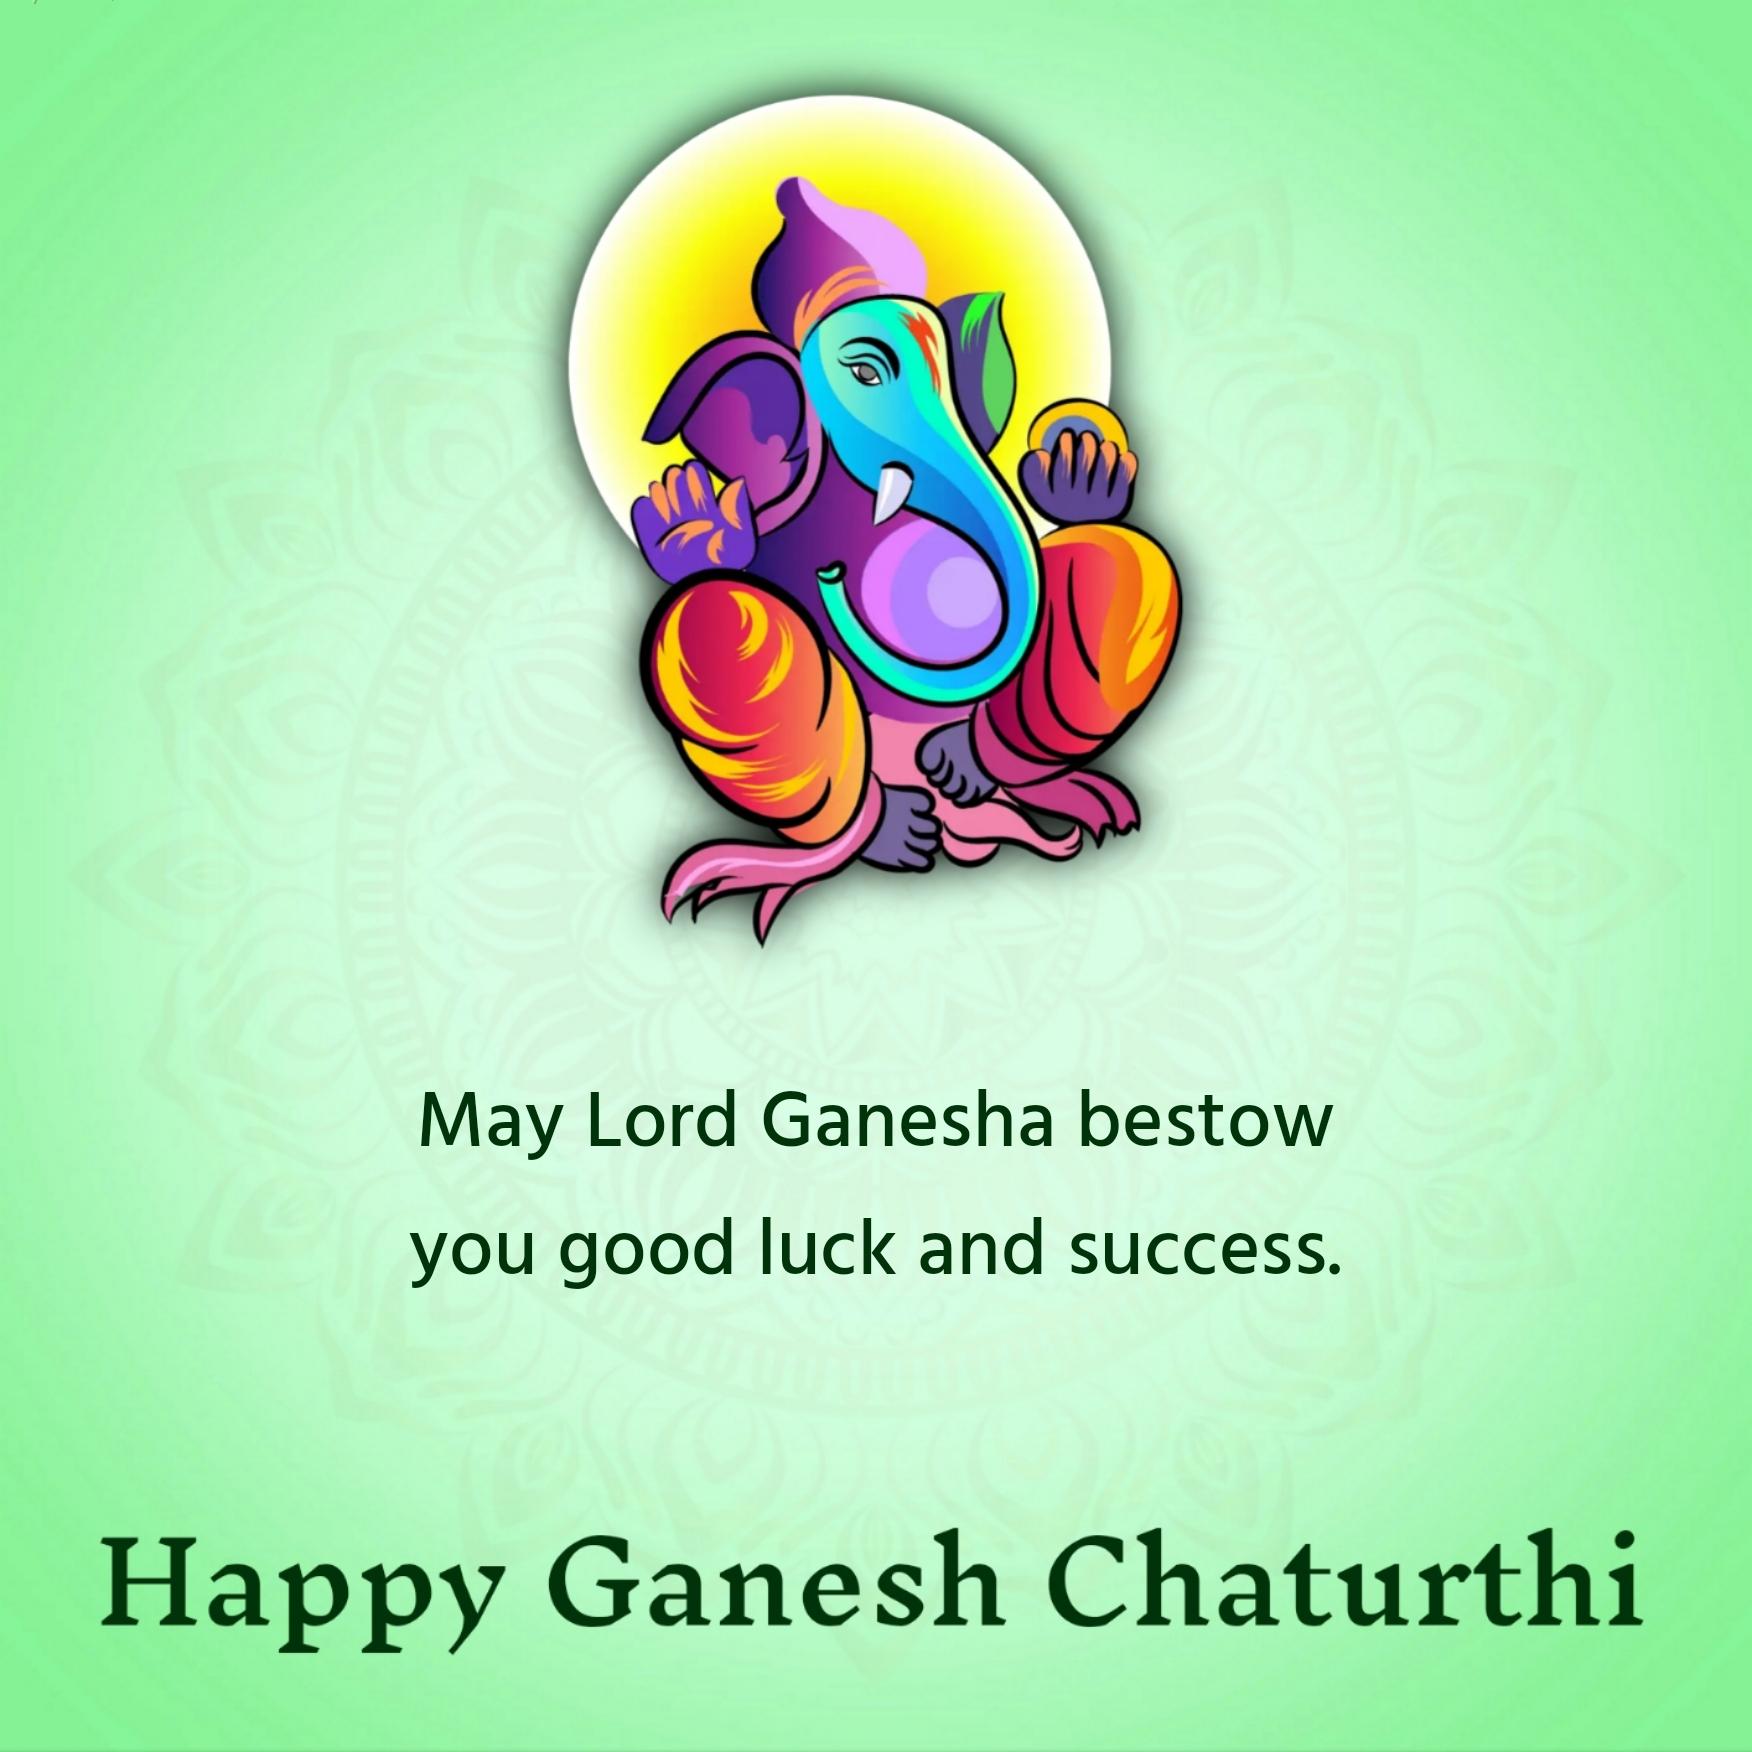 May Lord Ganesha bestow you good luck and success